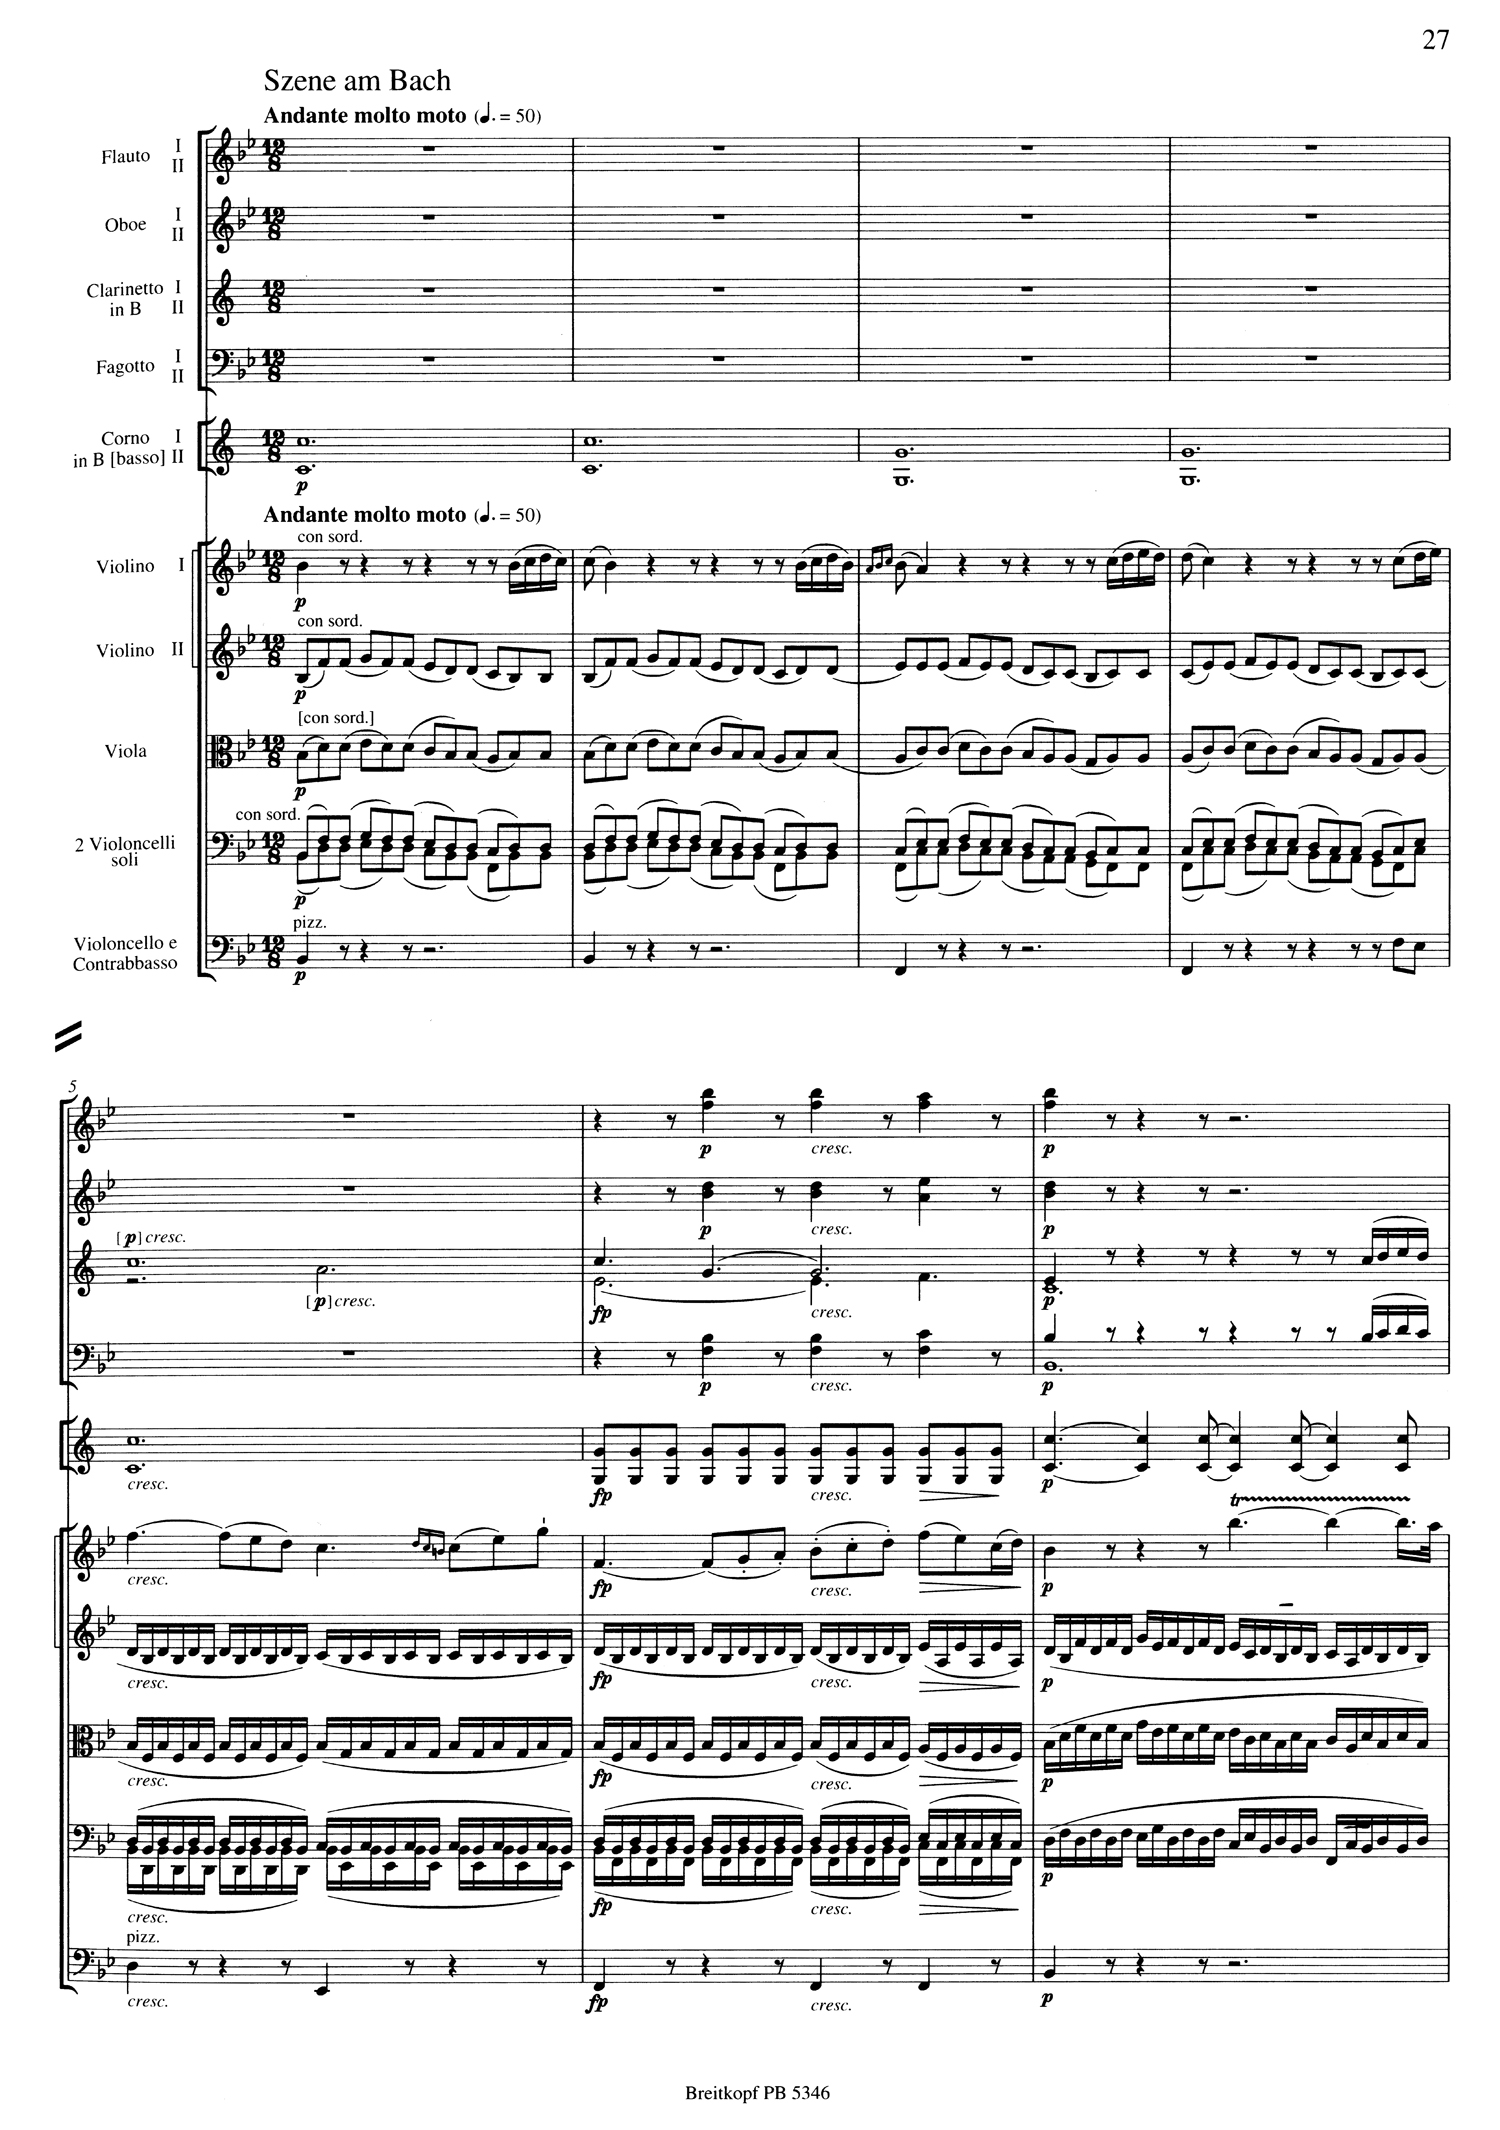 Beethoven 6 Score 3.jpg